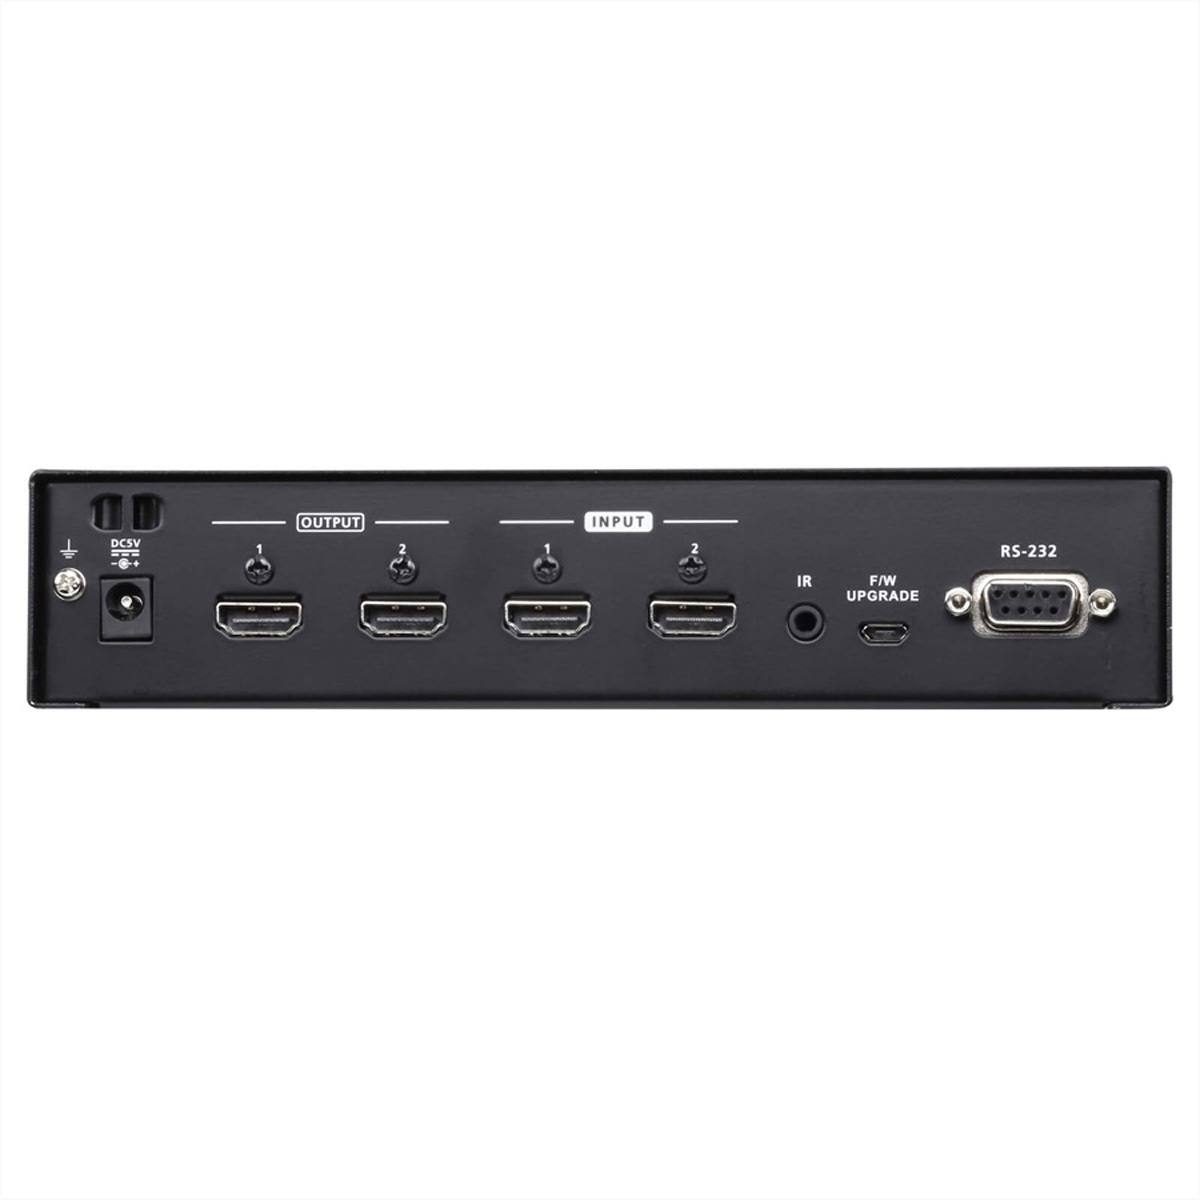 HDMI 2 4K VM0202H HDMI-Video-Matrix-Switch Matrix Switch x 2 Audio/Video ATEN